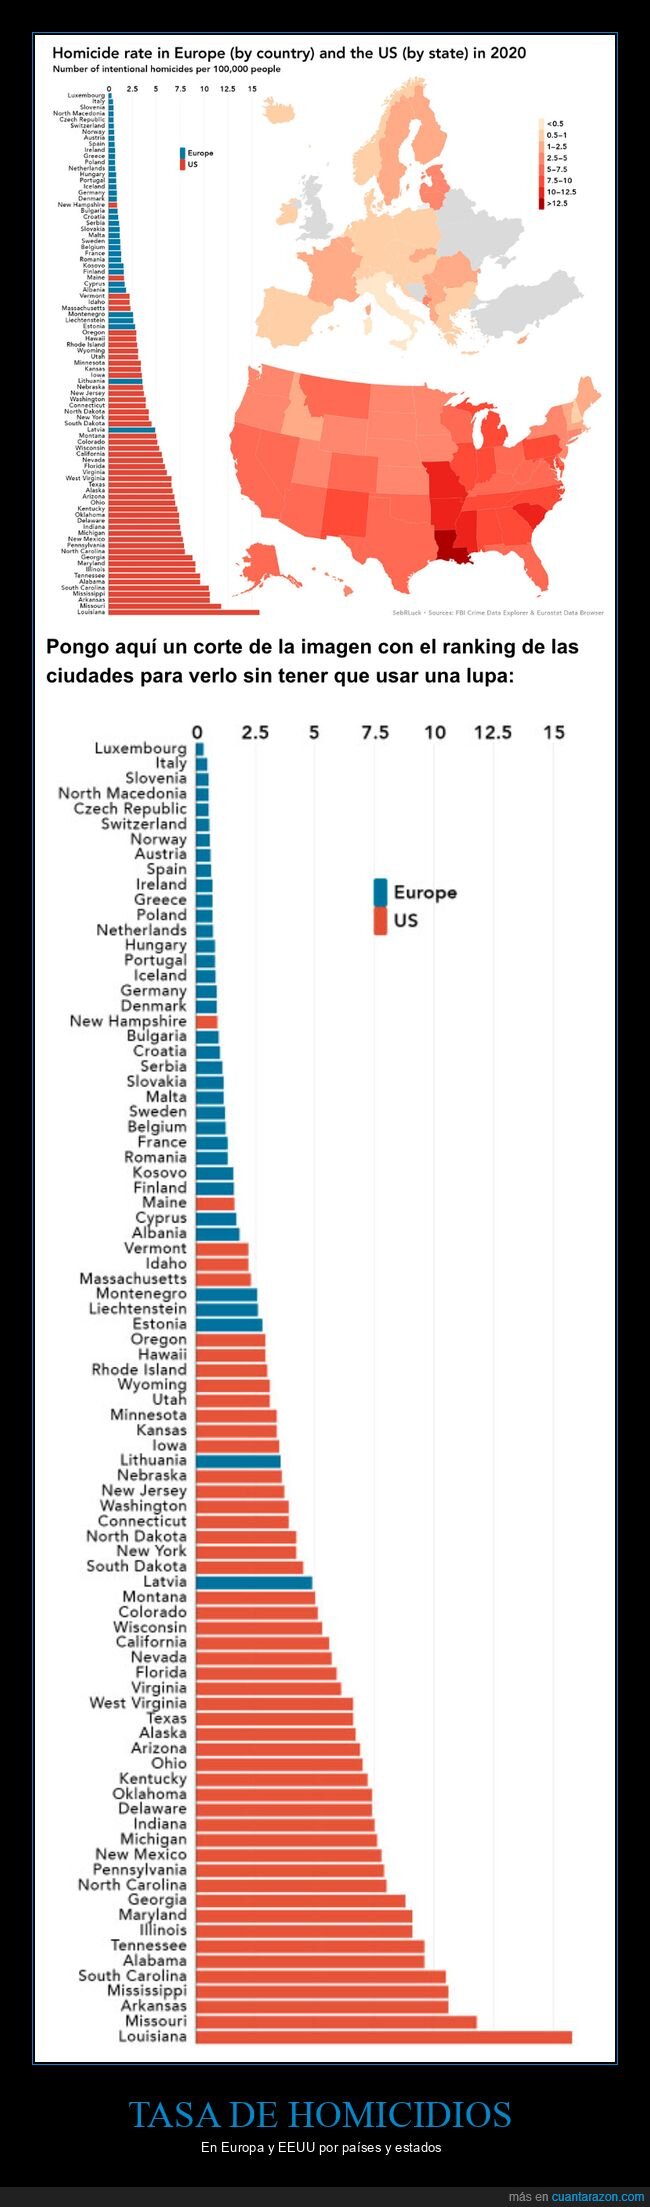 tasa de homicidios,europa,eeuu,países